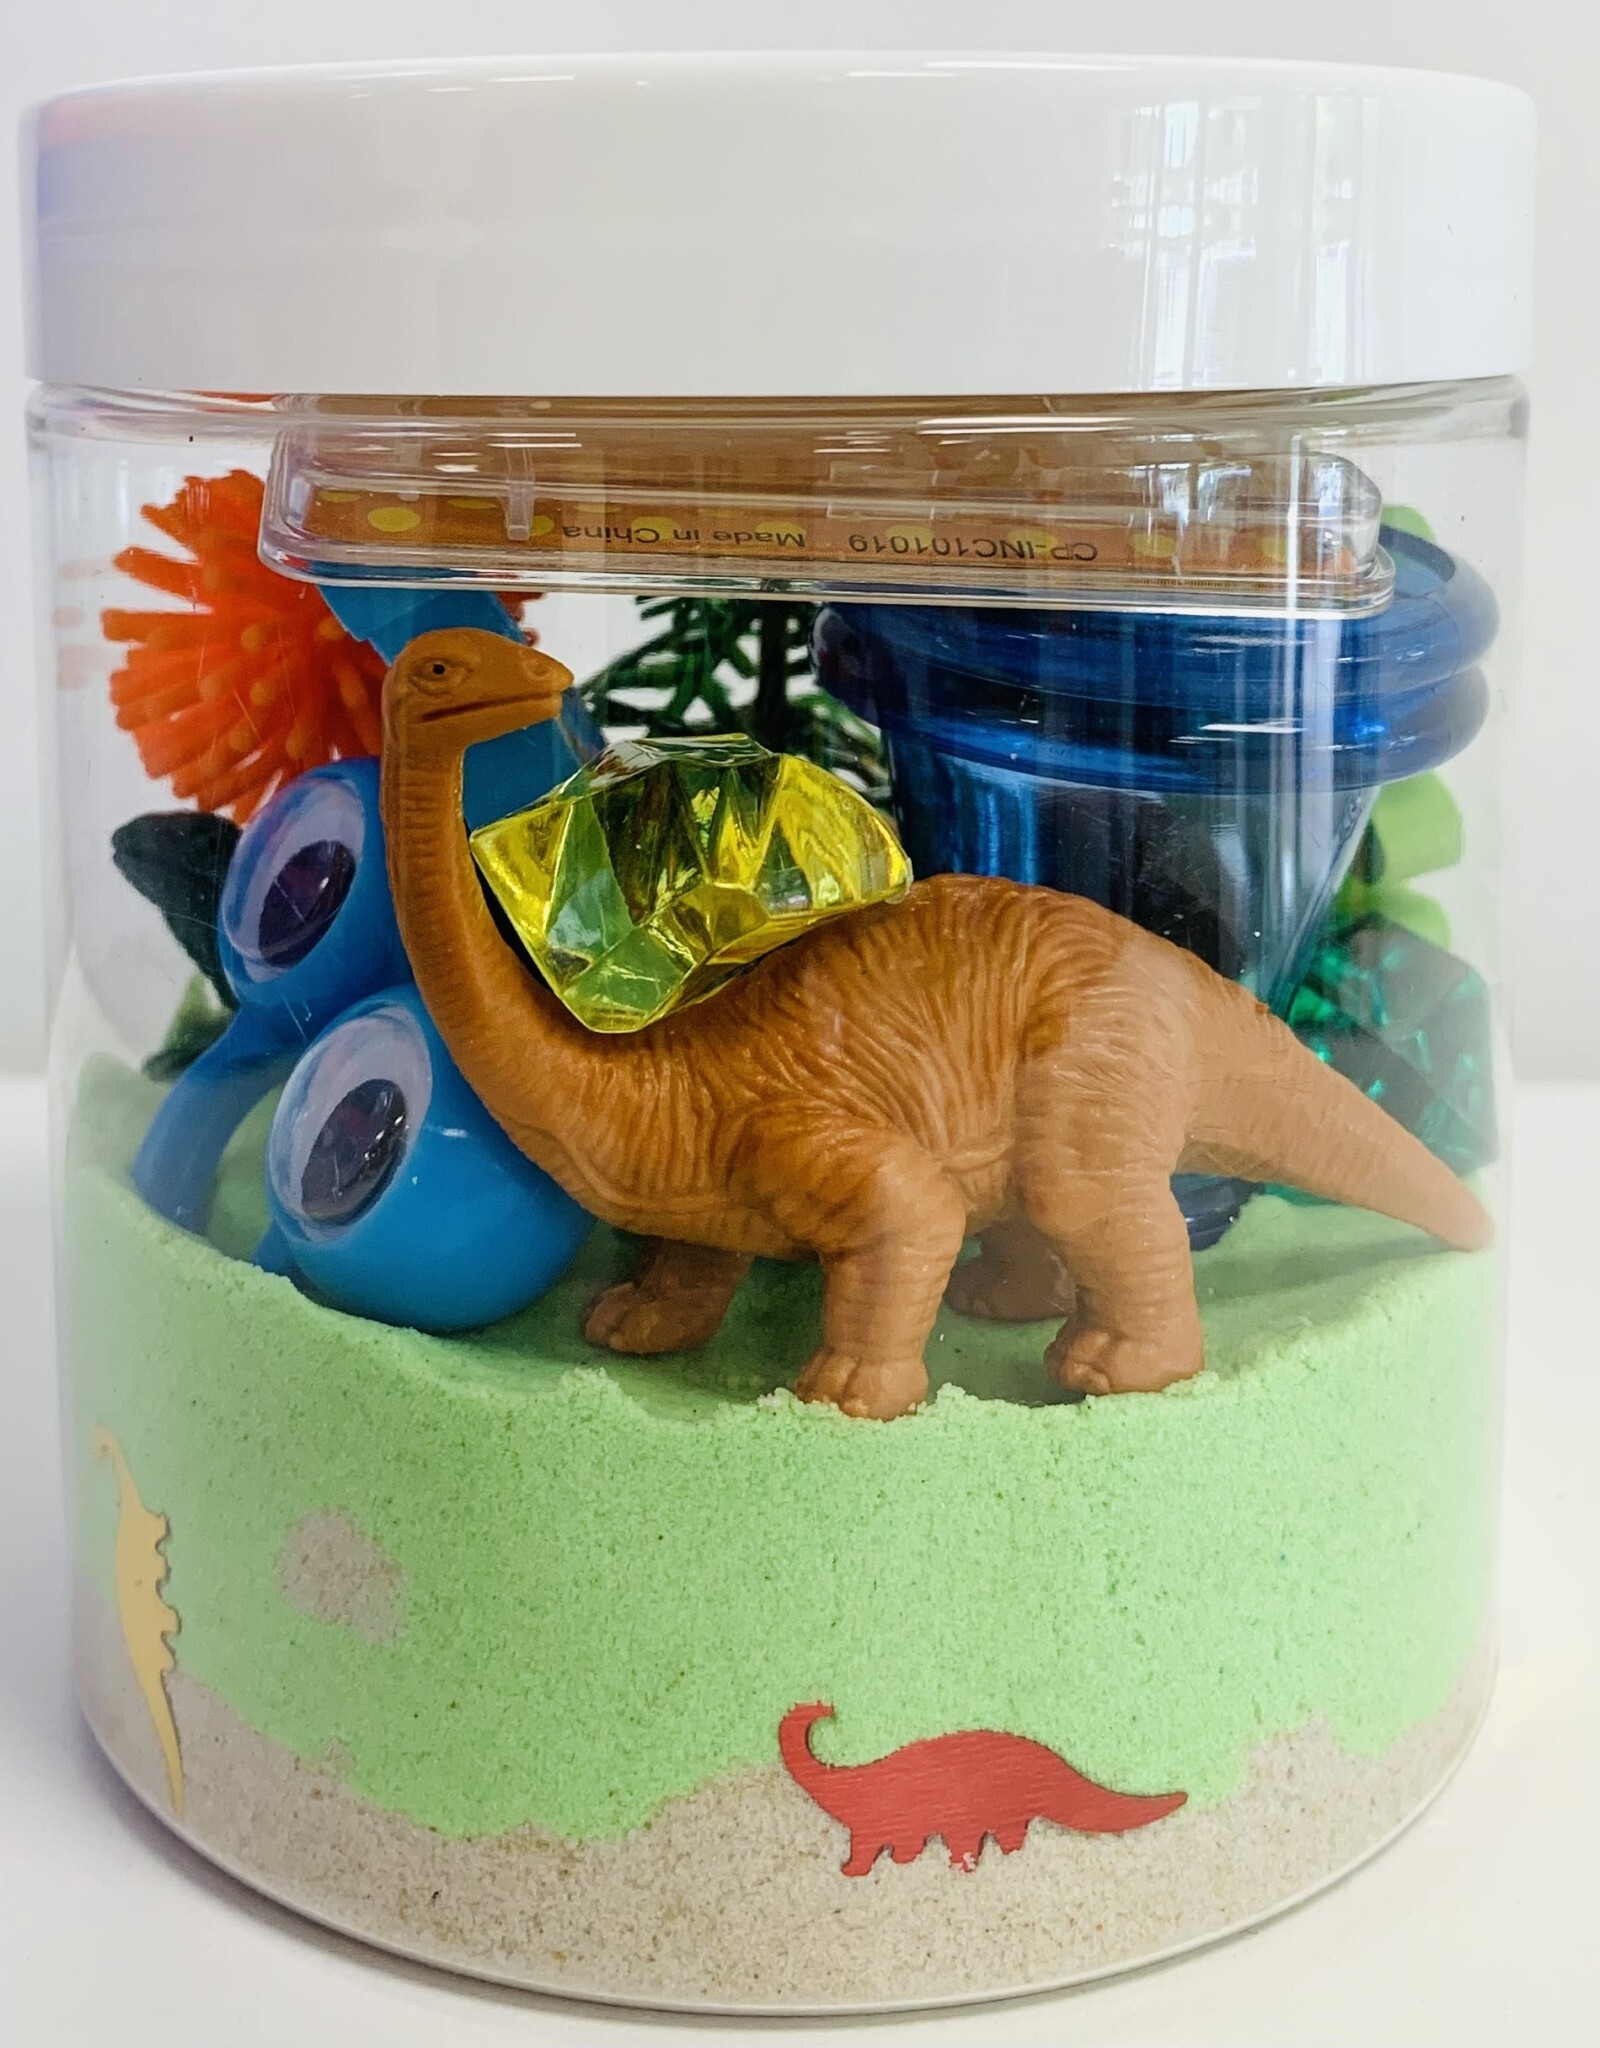 Large Magical Jar of Sand, Dinosaur